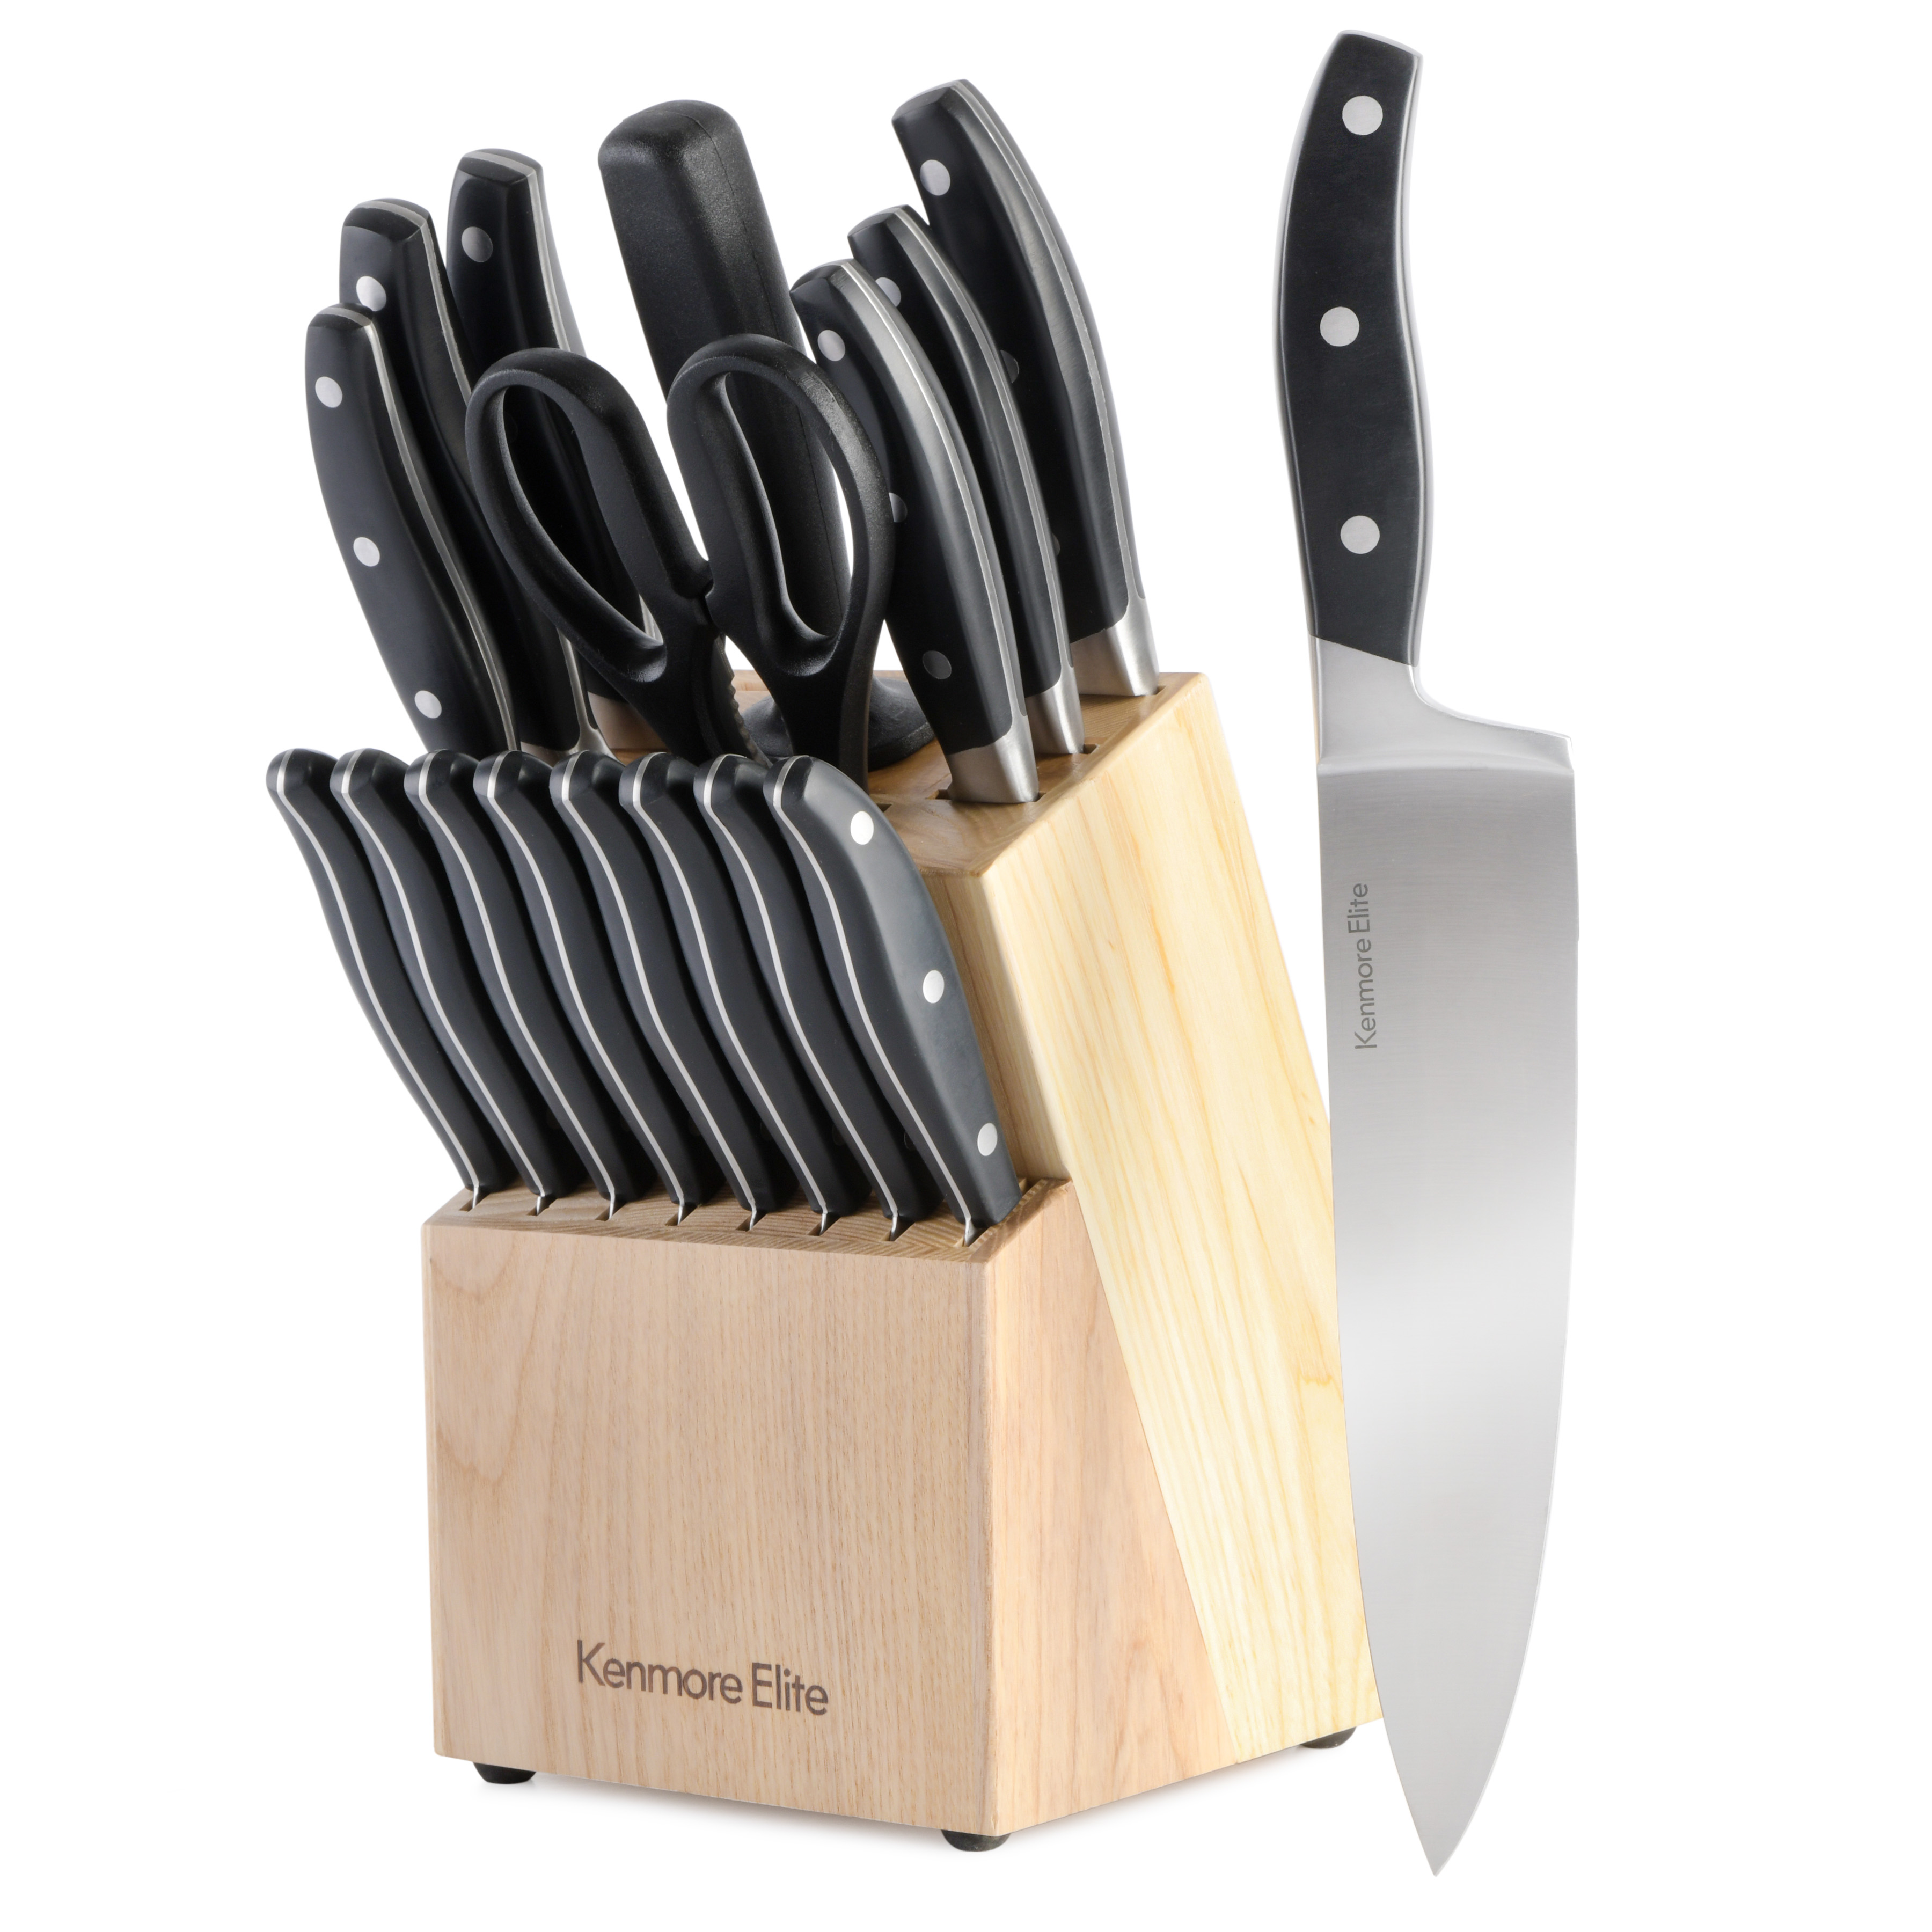 Kenmore Elite Lucas Forged Stainless Steel Cutlery Knife Block Set, 18-Piece, Black